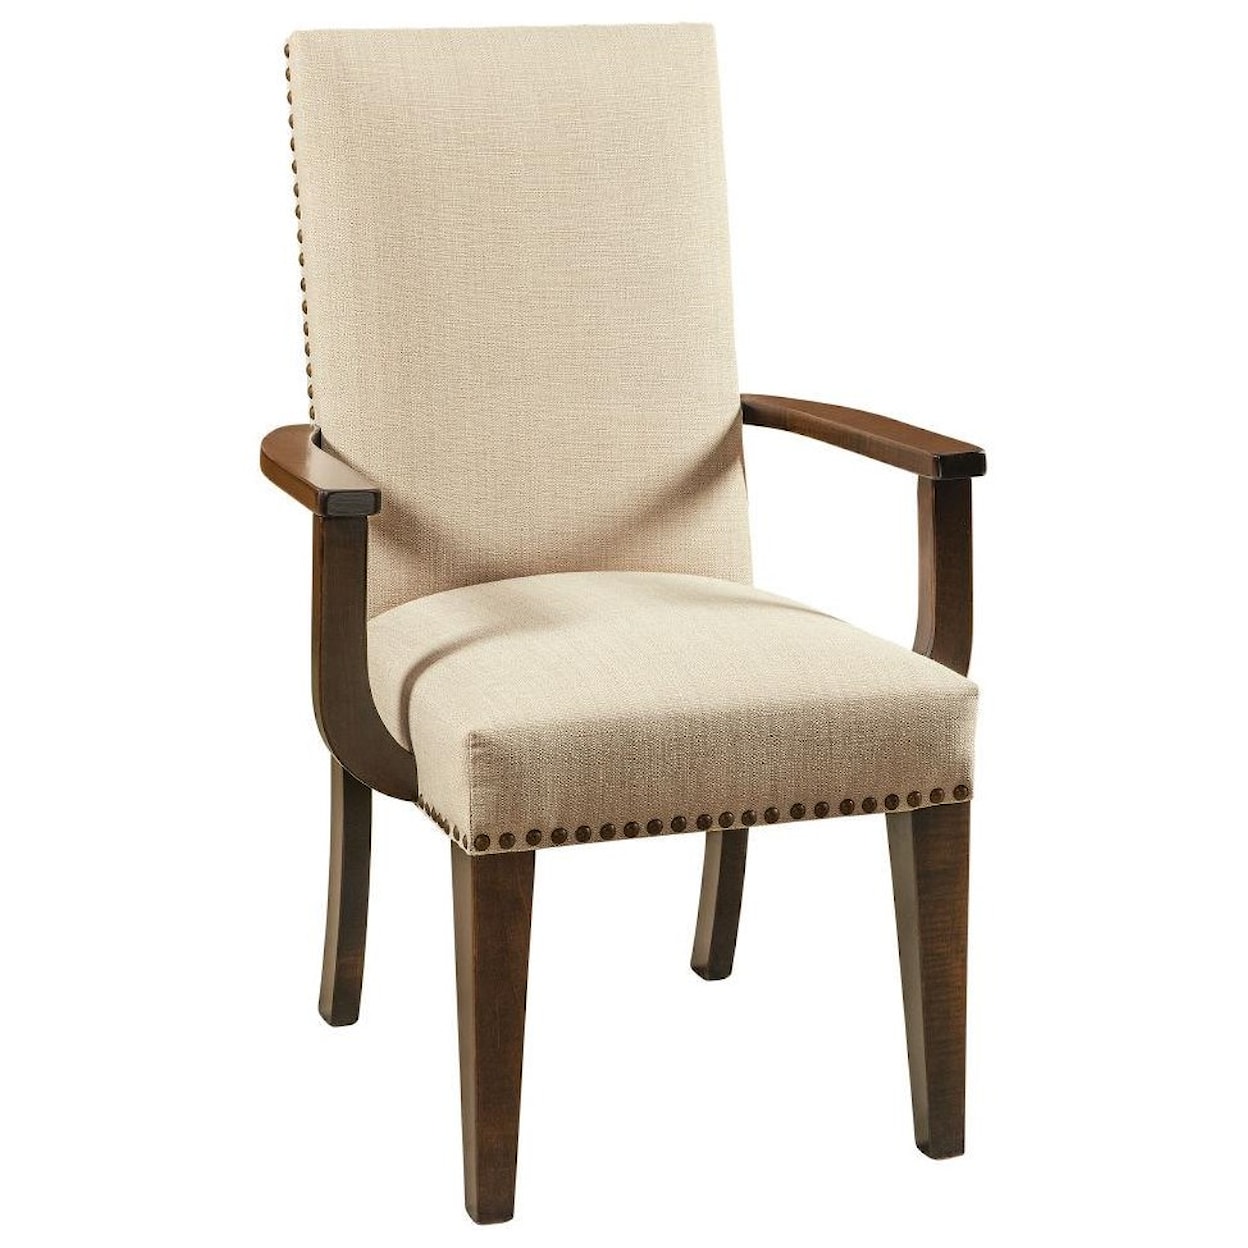 F&N Woodworking Corbin Arm Chair